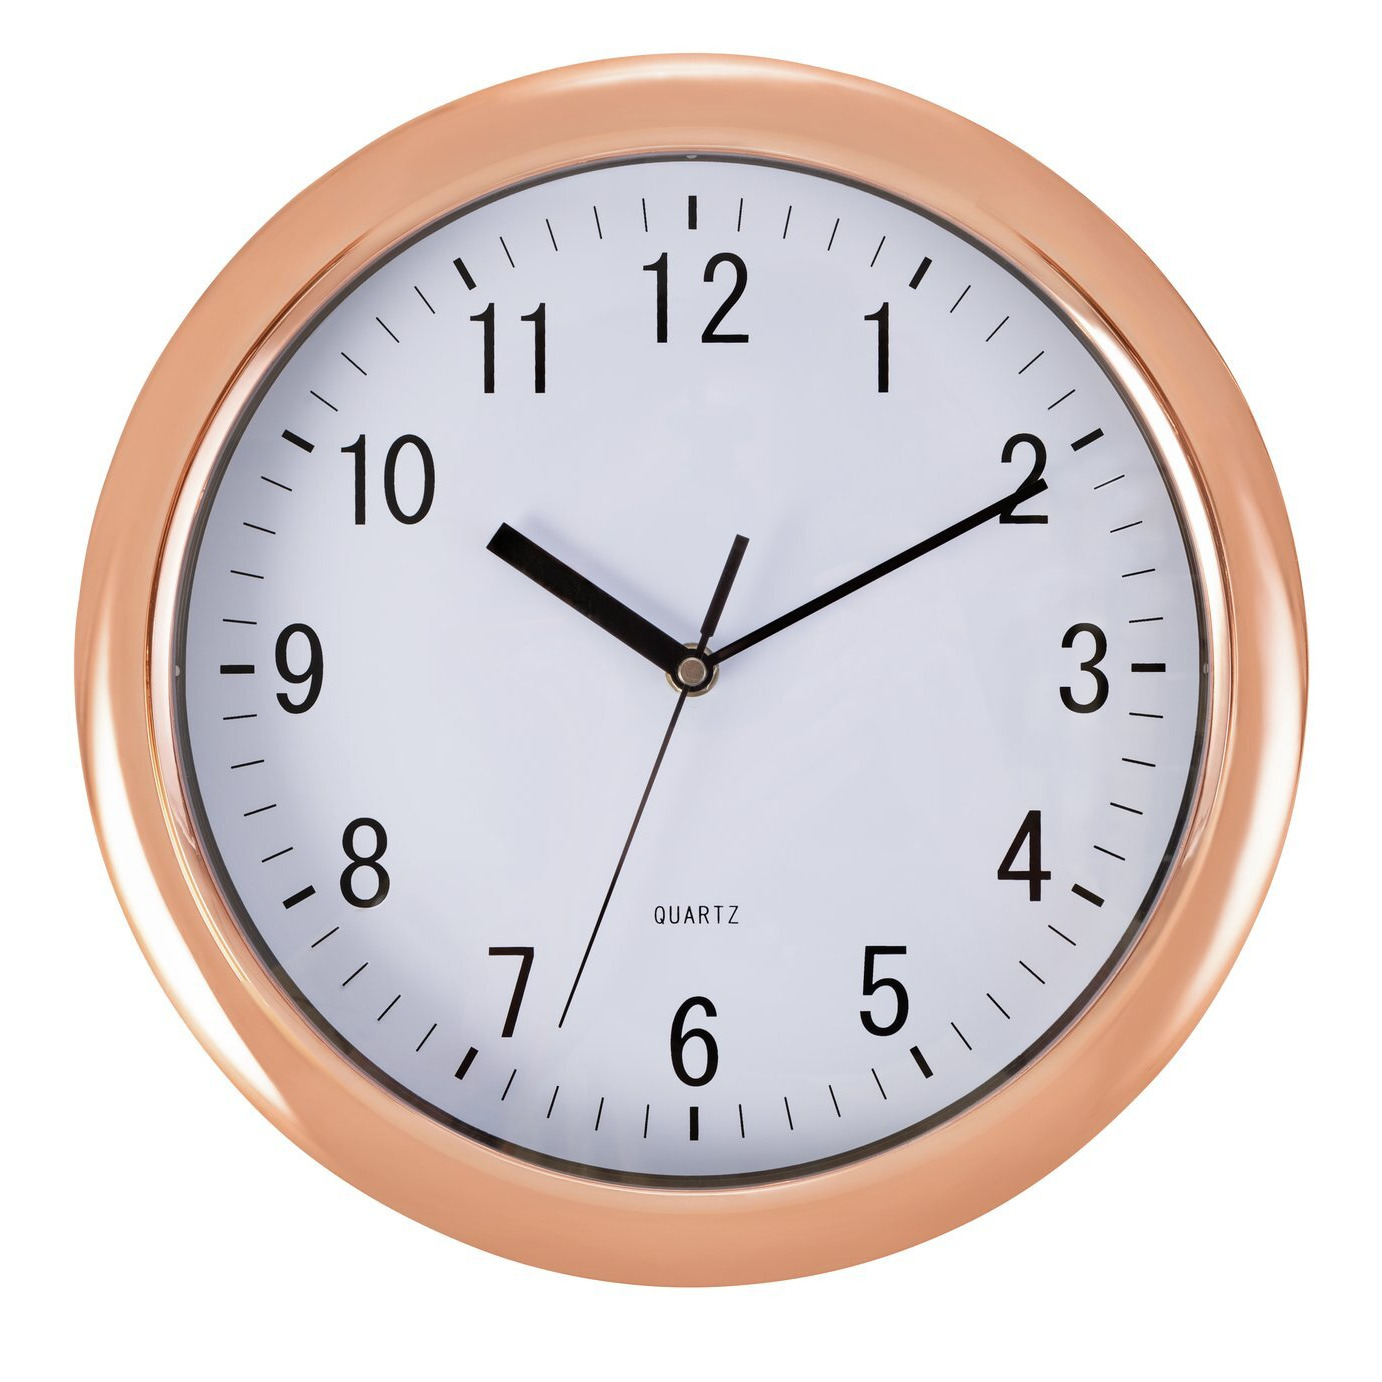 Argos Home Wall Clock - Rose Gold - image 1